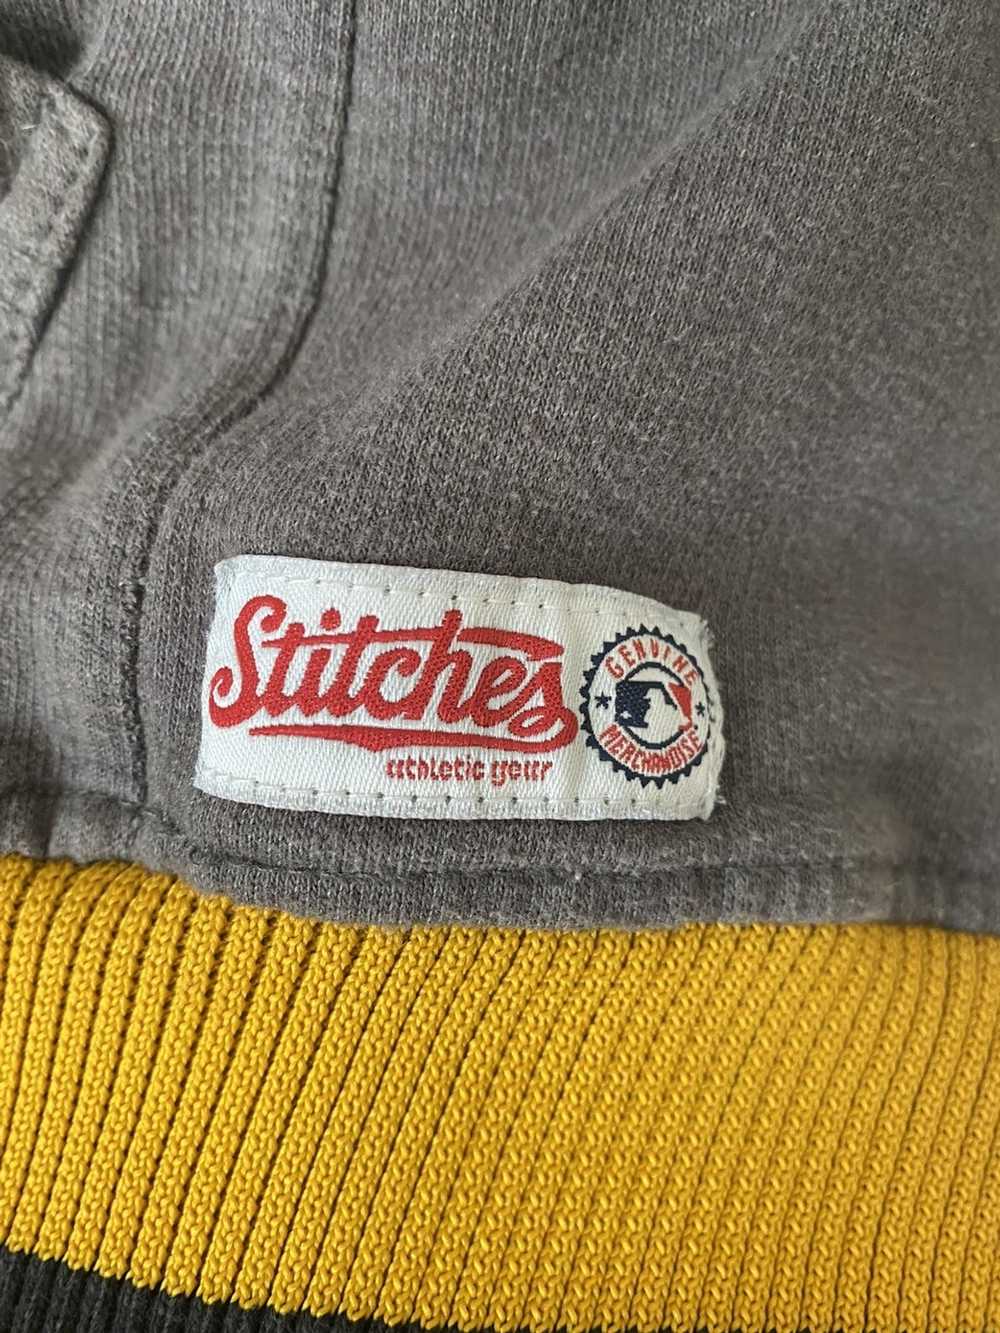 MLB Pittsburg Pirates Jacket/Sweatshirt - image 6